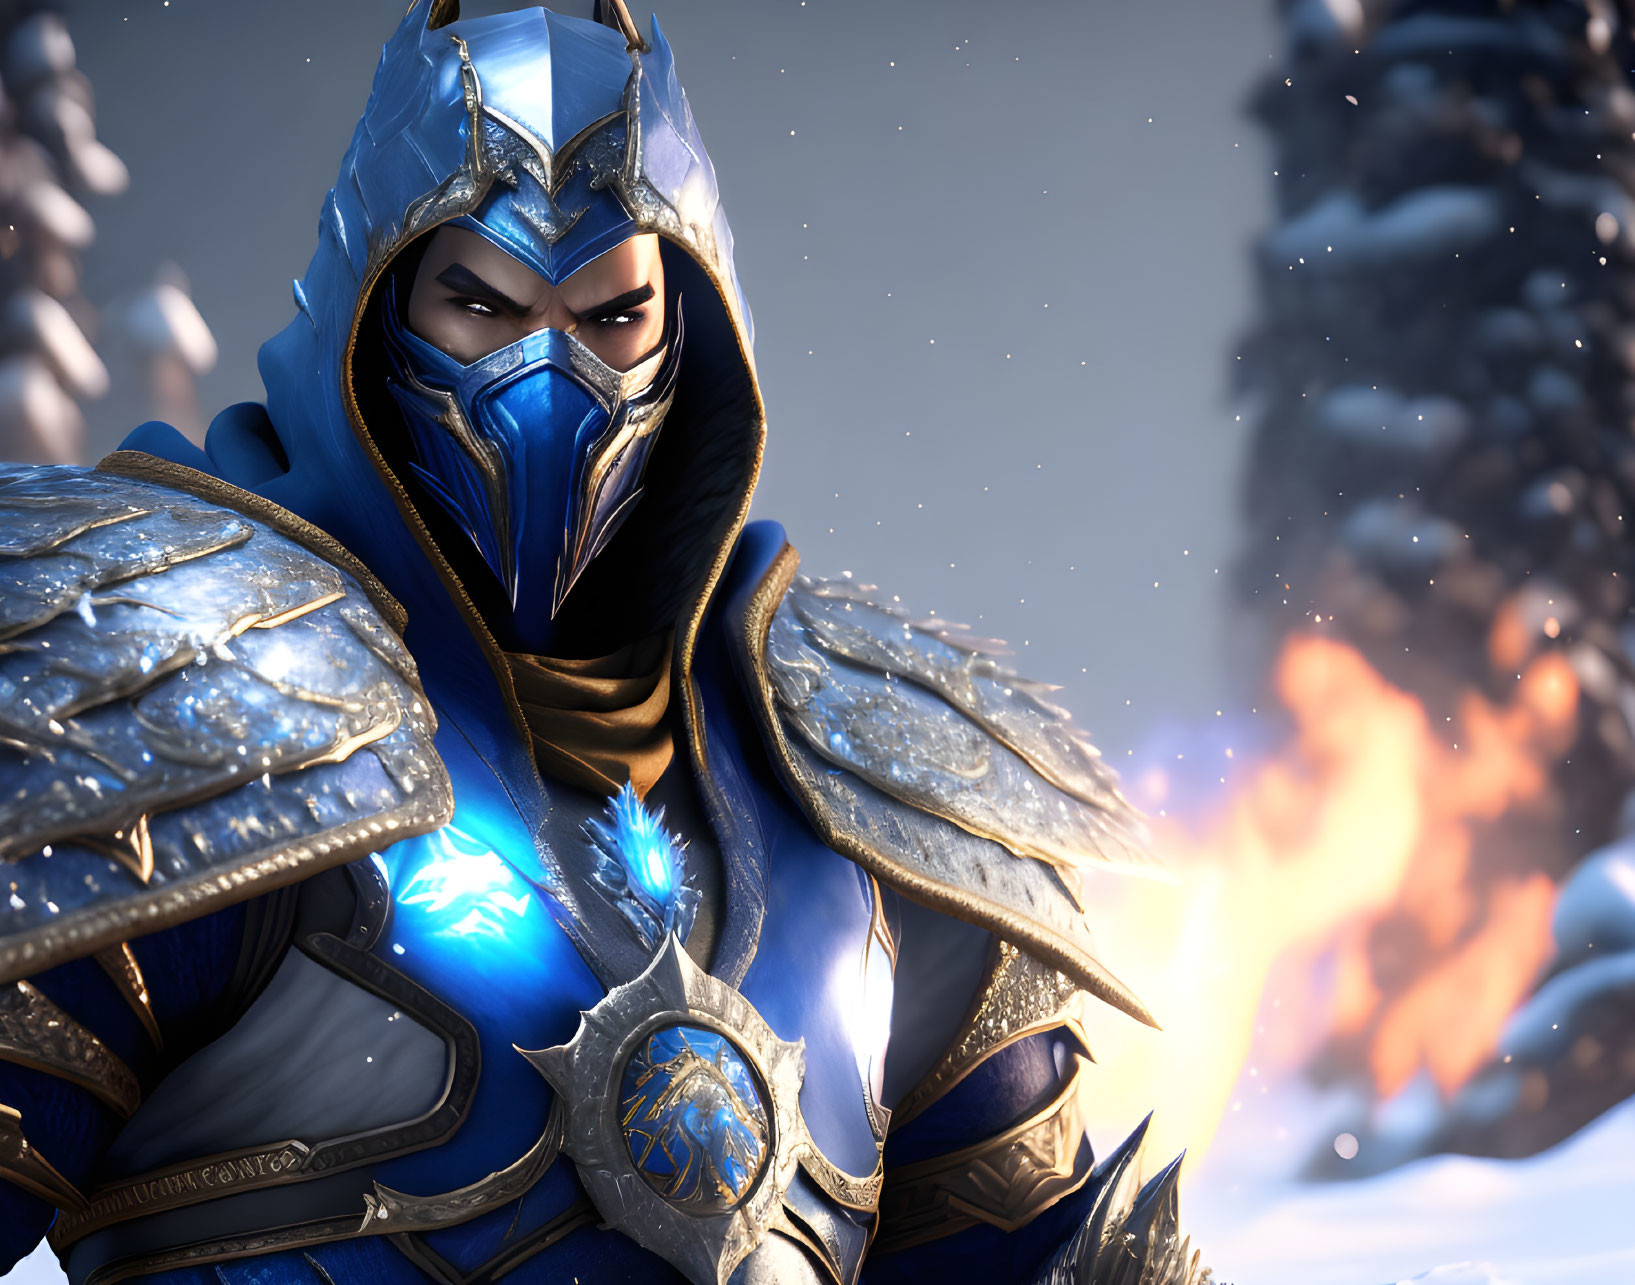 Knight in Blue Armor Stands in Snowy Landscape